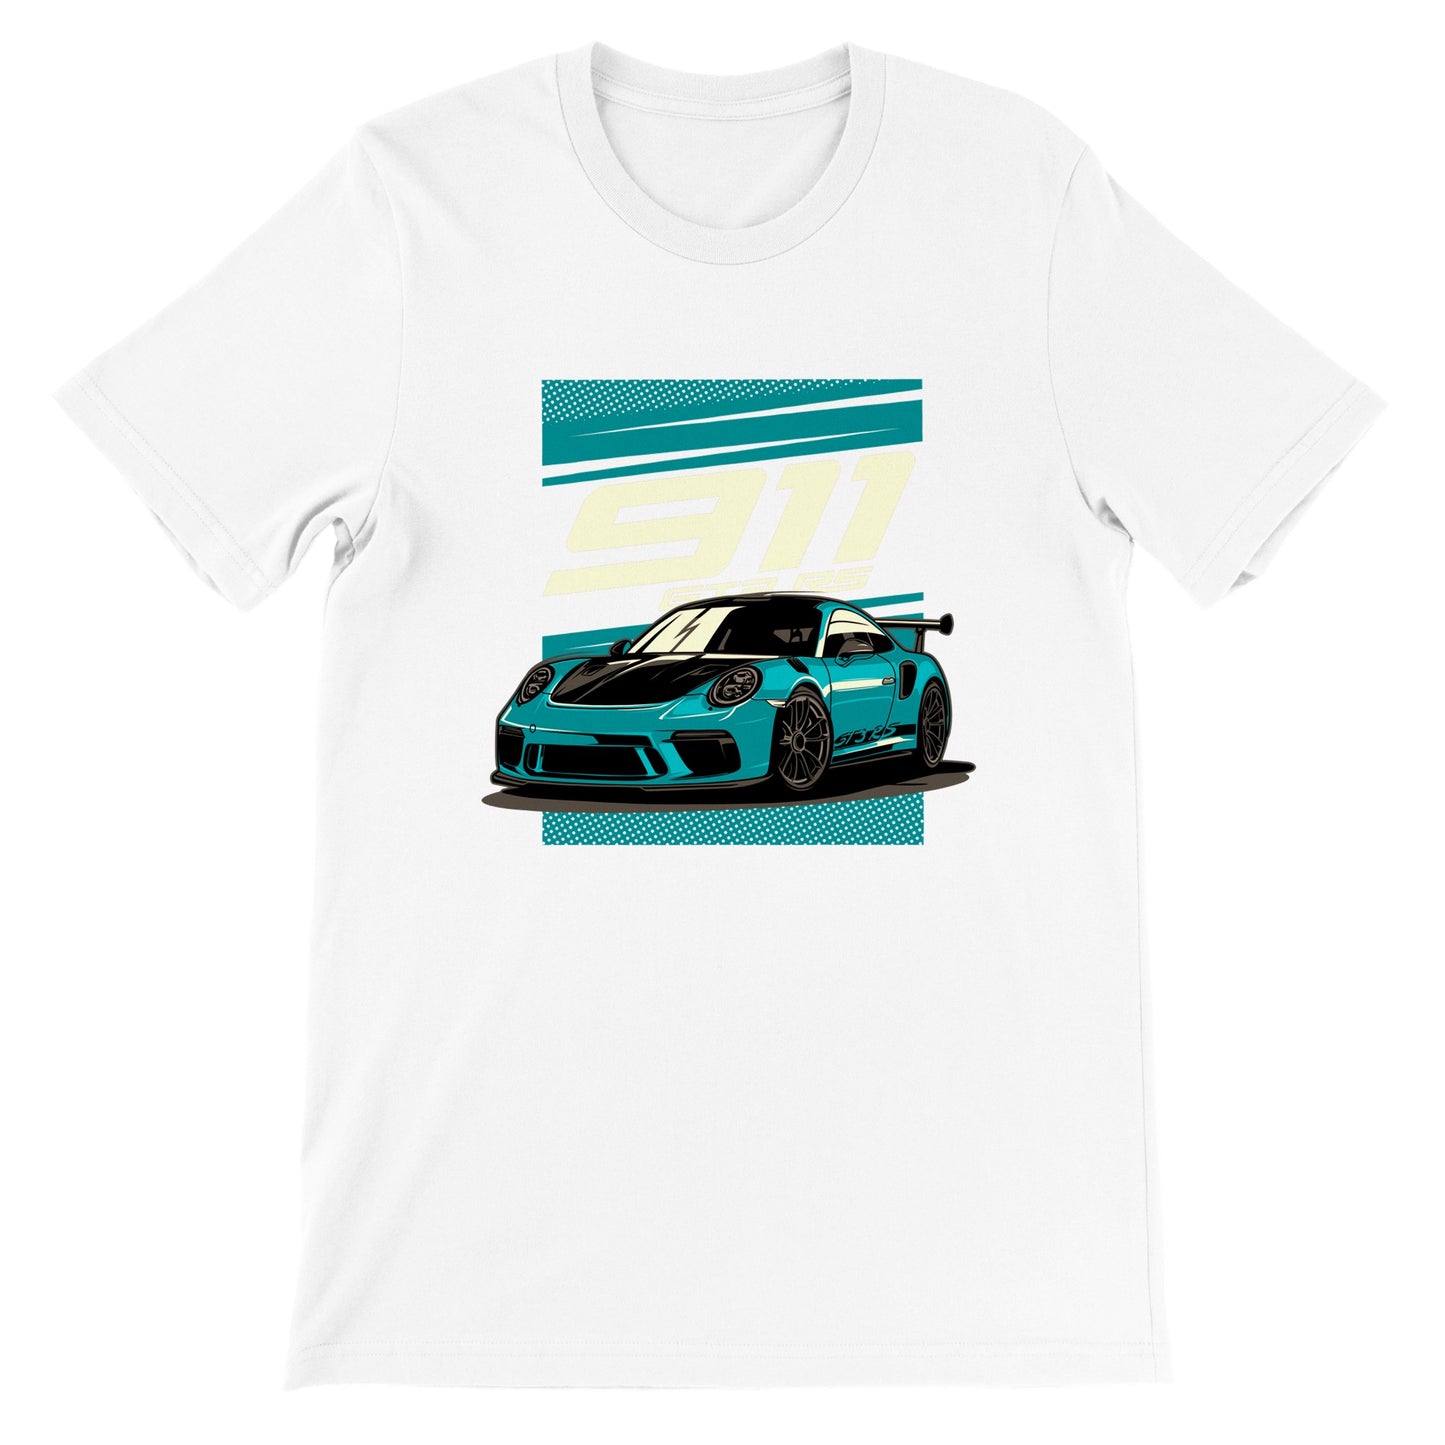 Car T-shirt - The 911 Dream - Artwork - Premium Unisex T-shirt